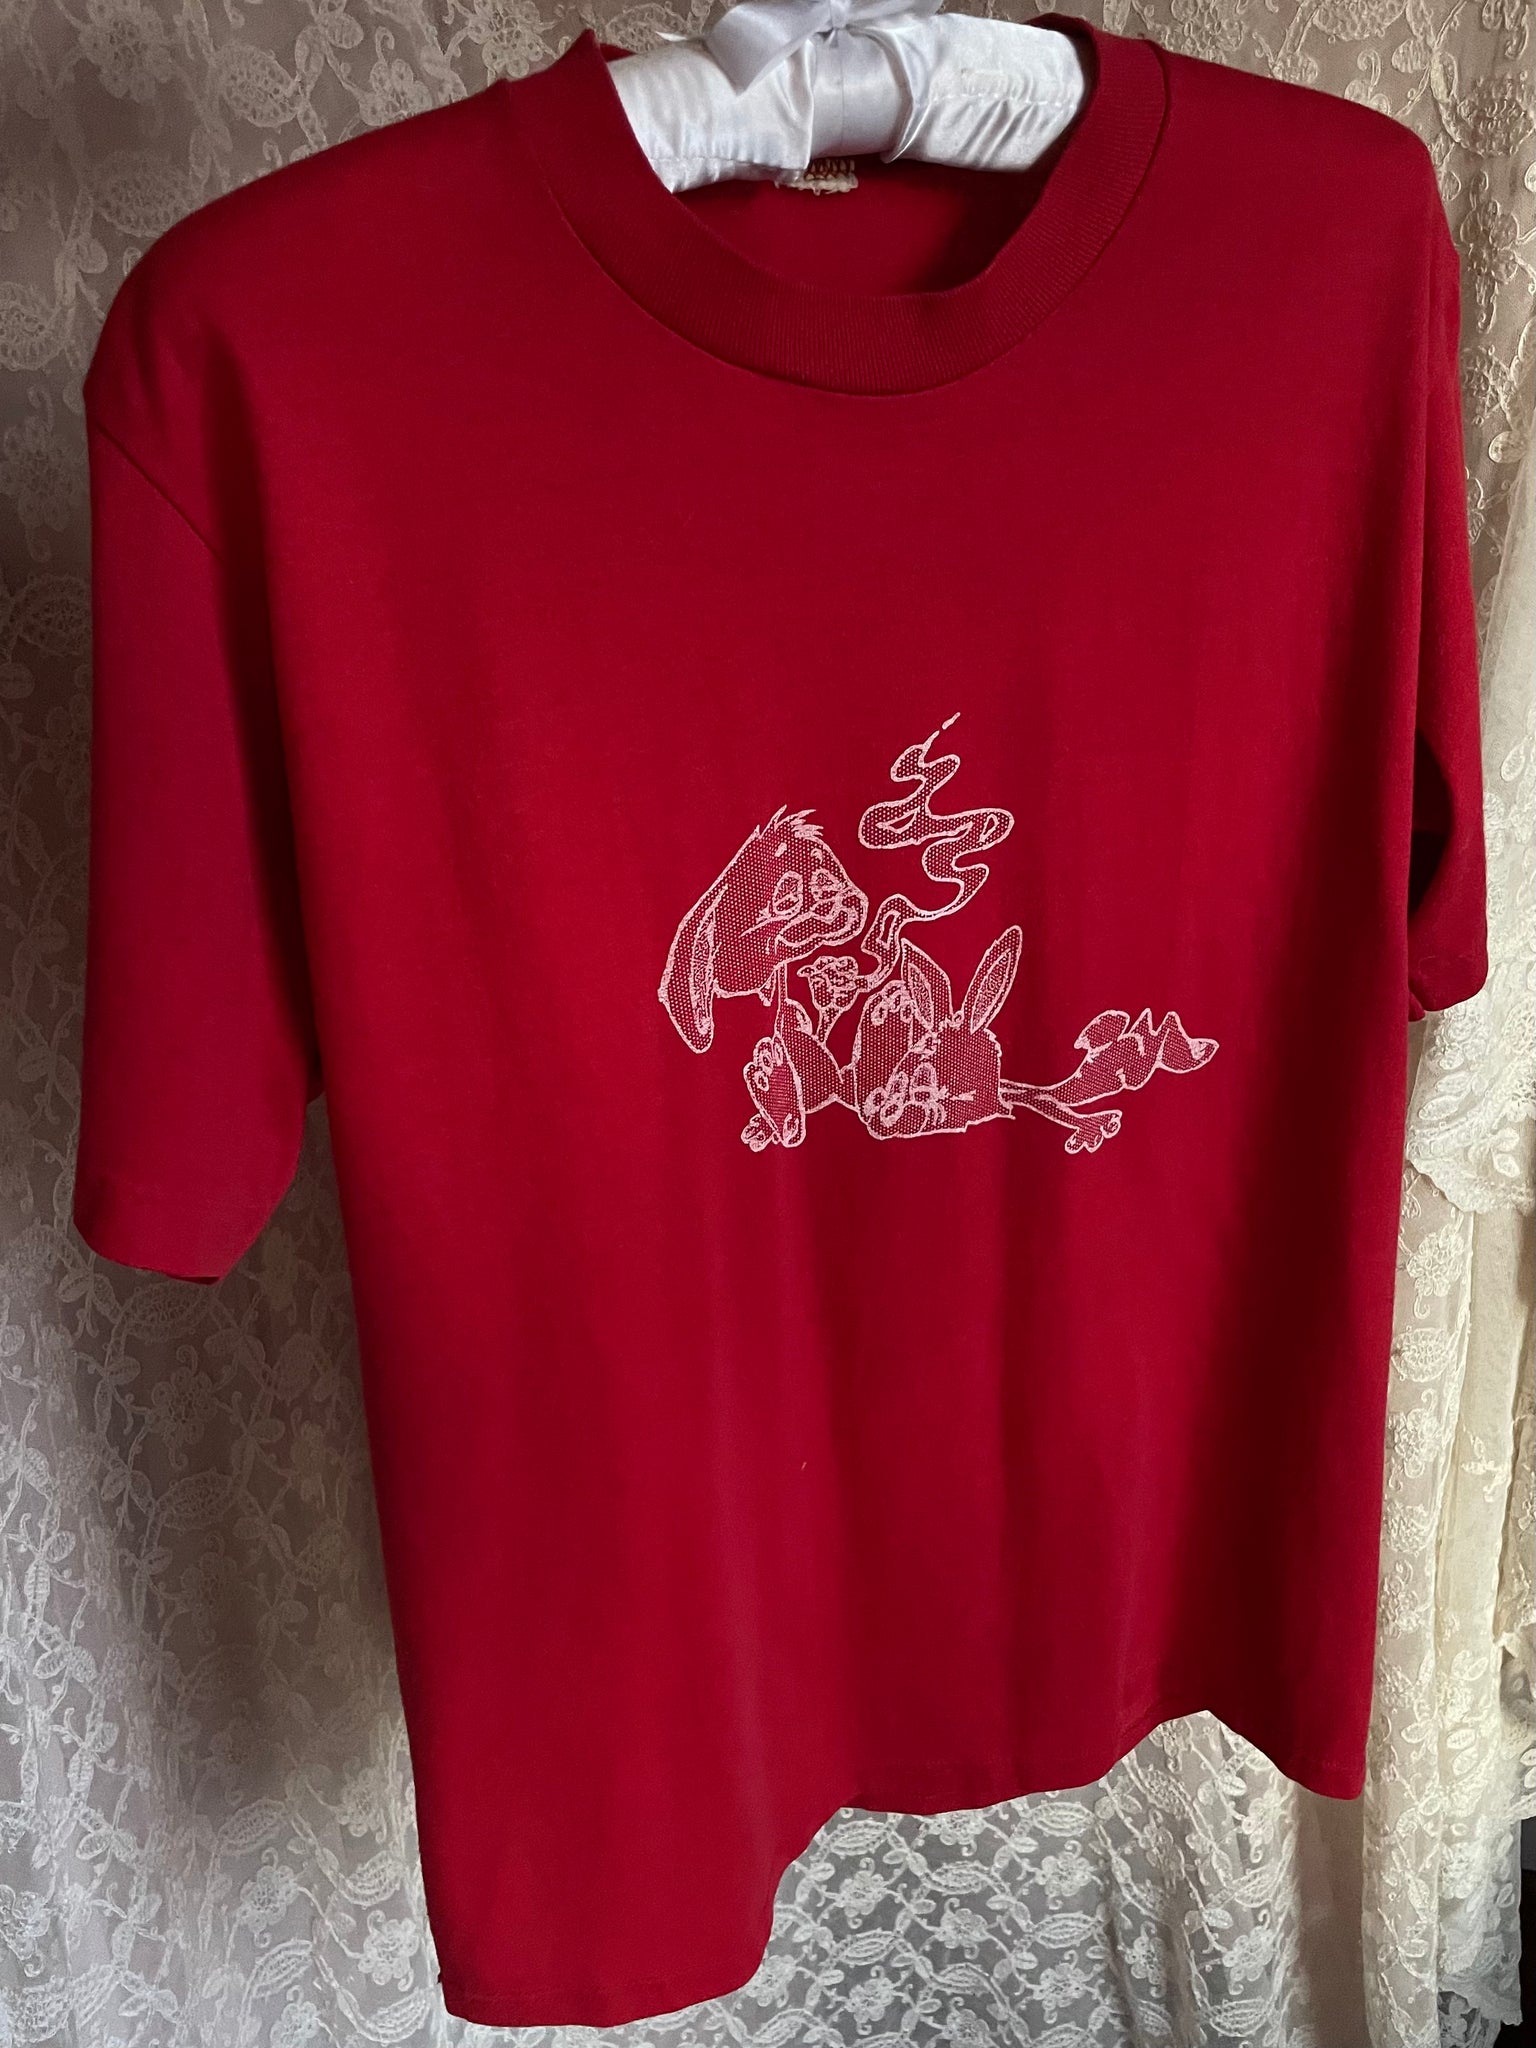 1970s Stoned Smoking Bunnies Novelty Print Red Tee T Shirt